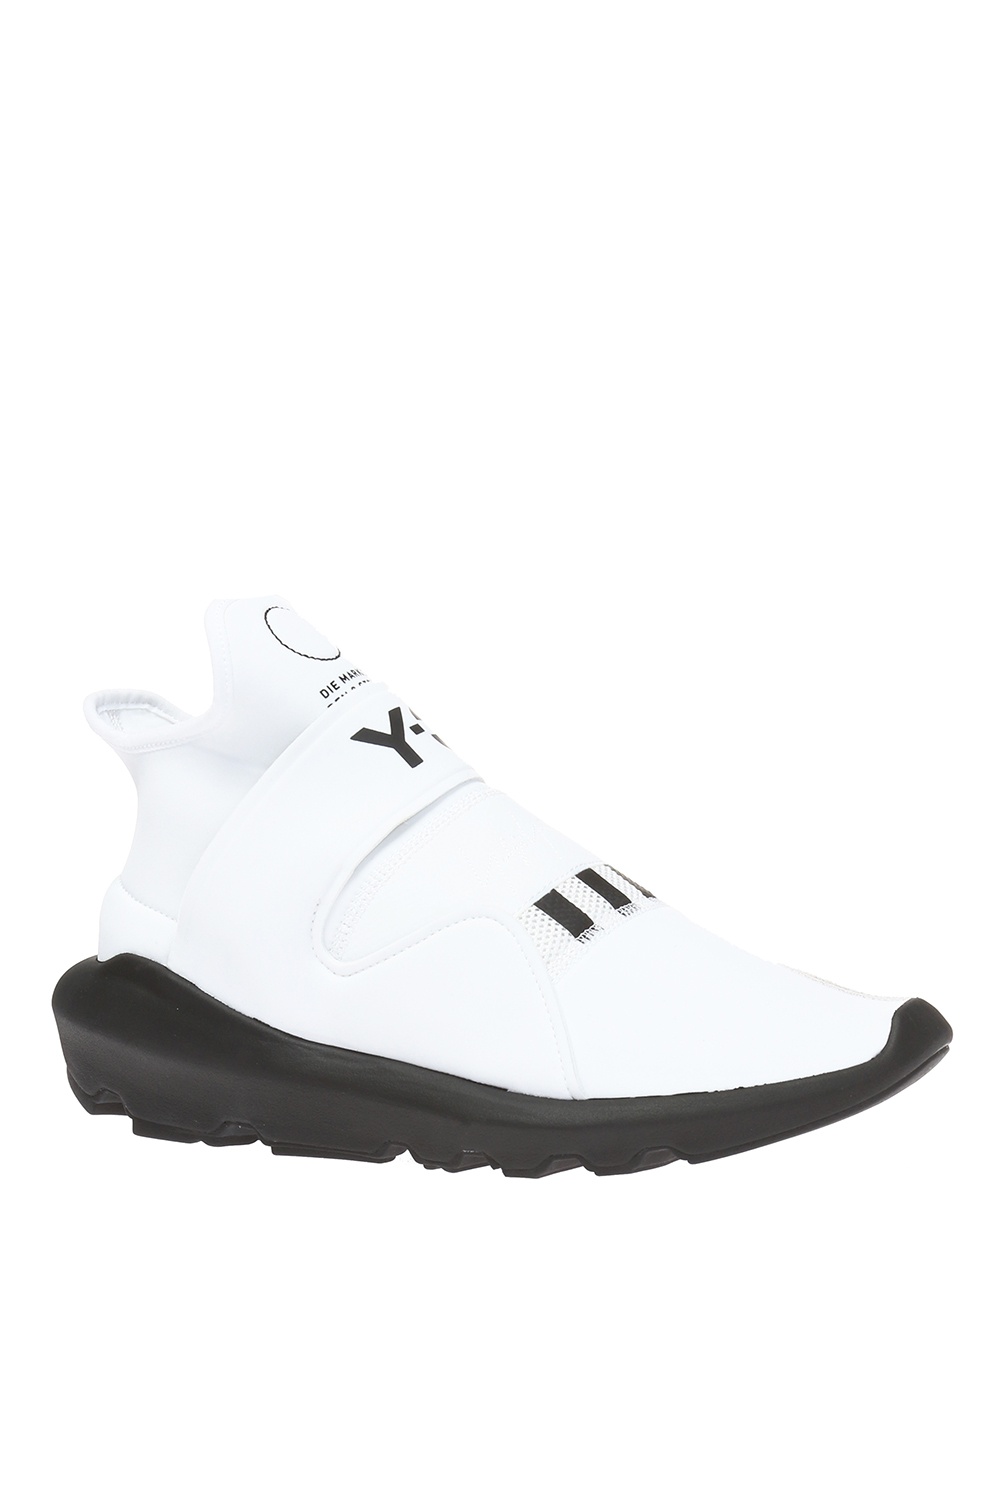 White 'Suberou' sneakers Y-3 Yohji Yamamoto - Vitkac GB